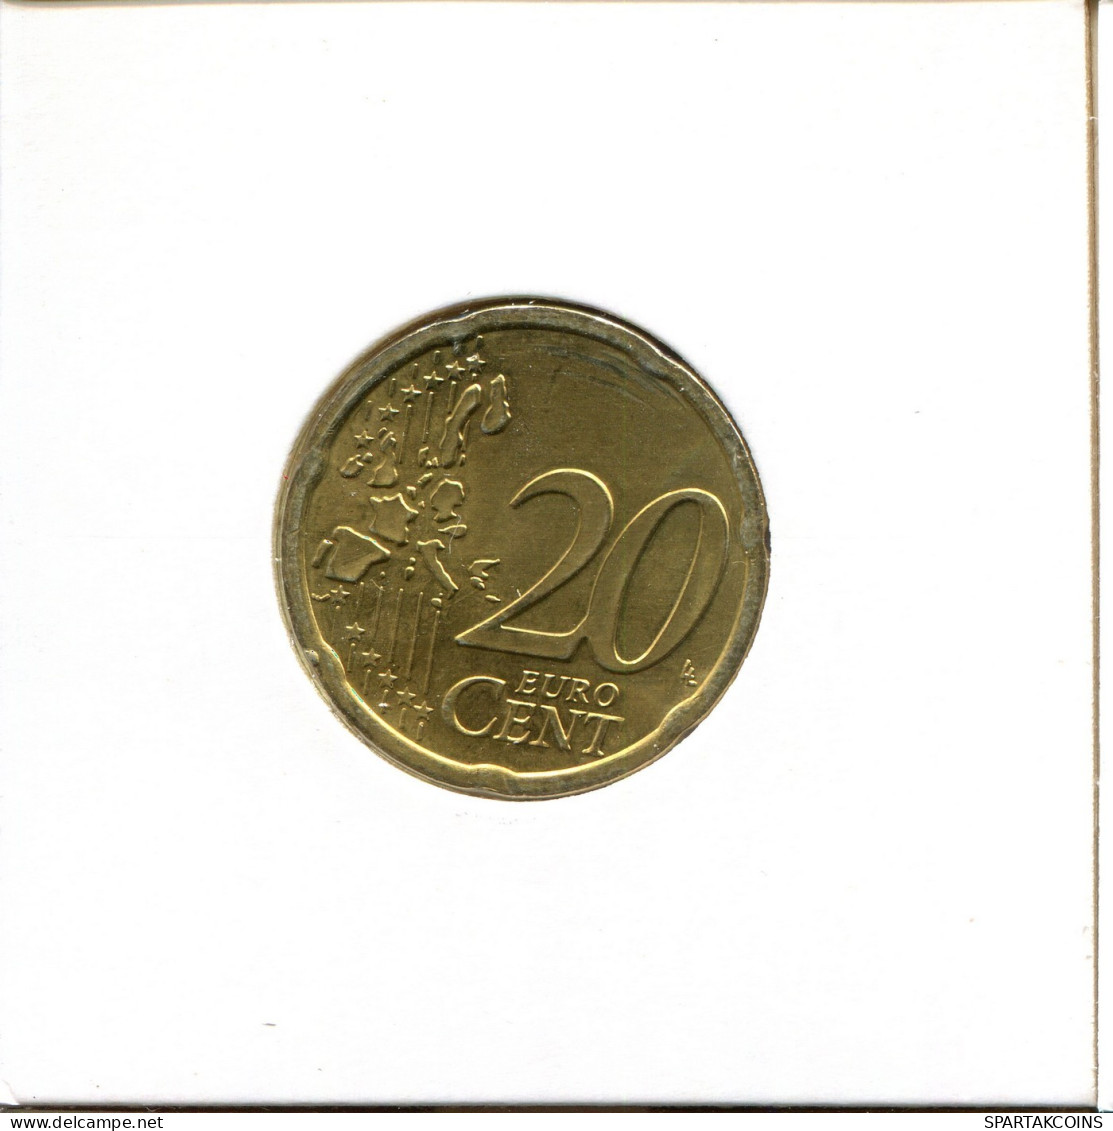 20 EURO CENTS 2006 AUSTRIA Moneda #EU027.E.A - Oostenrijk